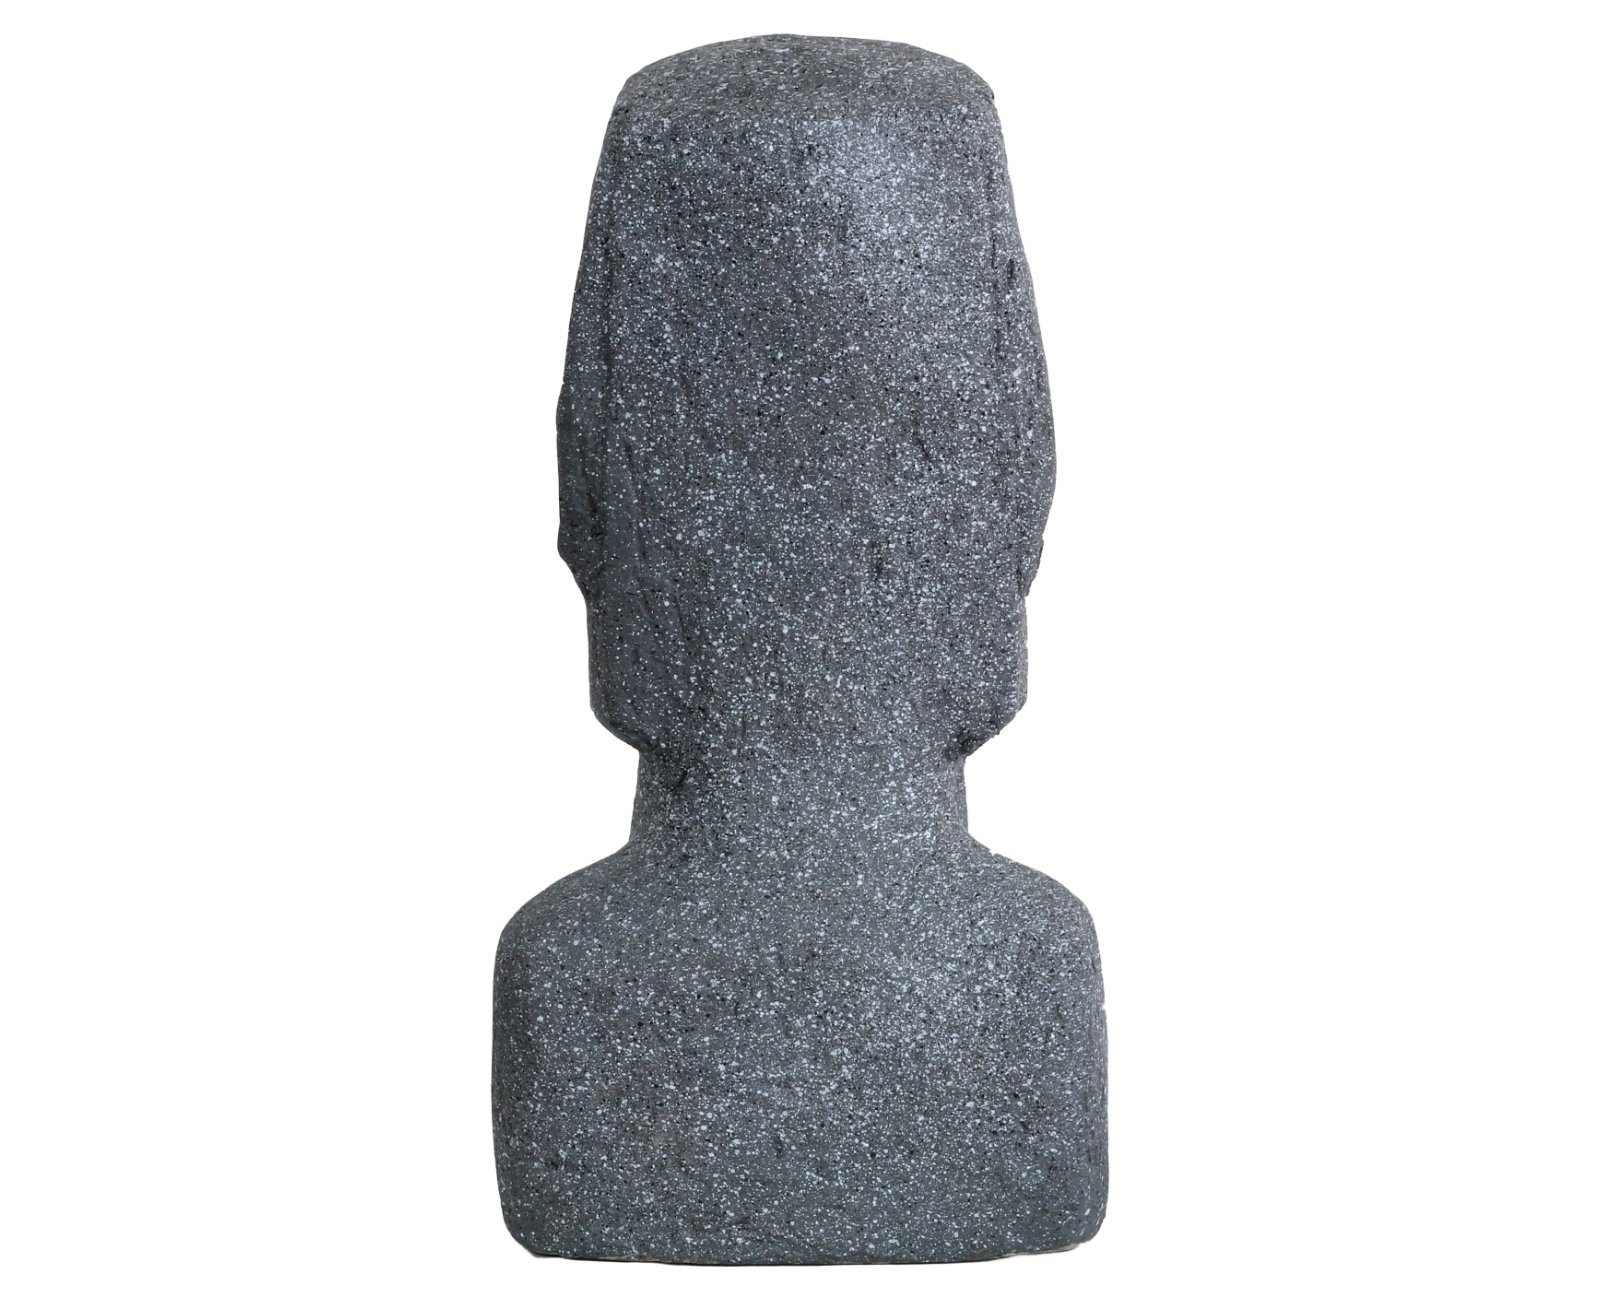 HAGO Buddhafigur Moai Kopf Skulptur Figur Gartenfigur Büste Osterinsel Statue Deko